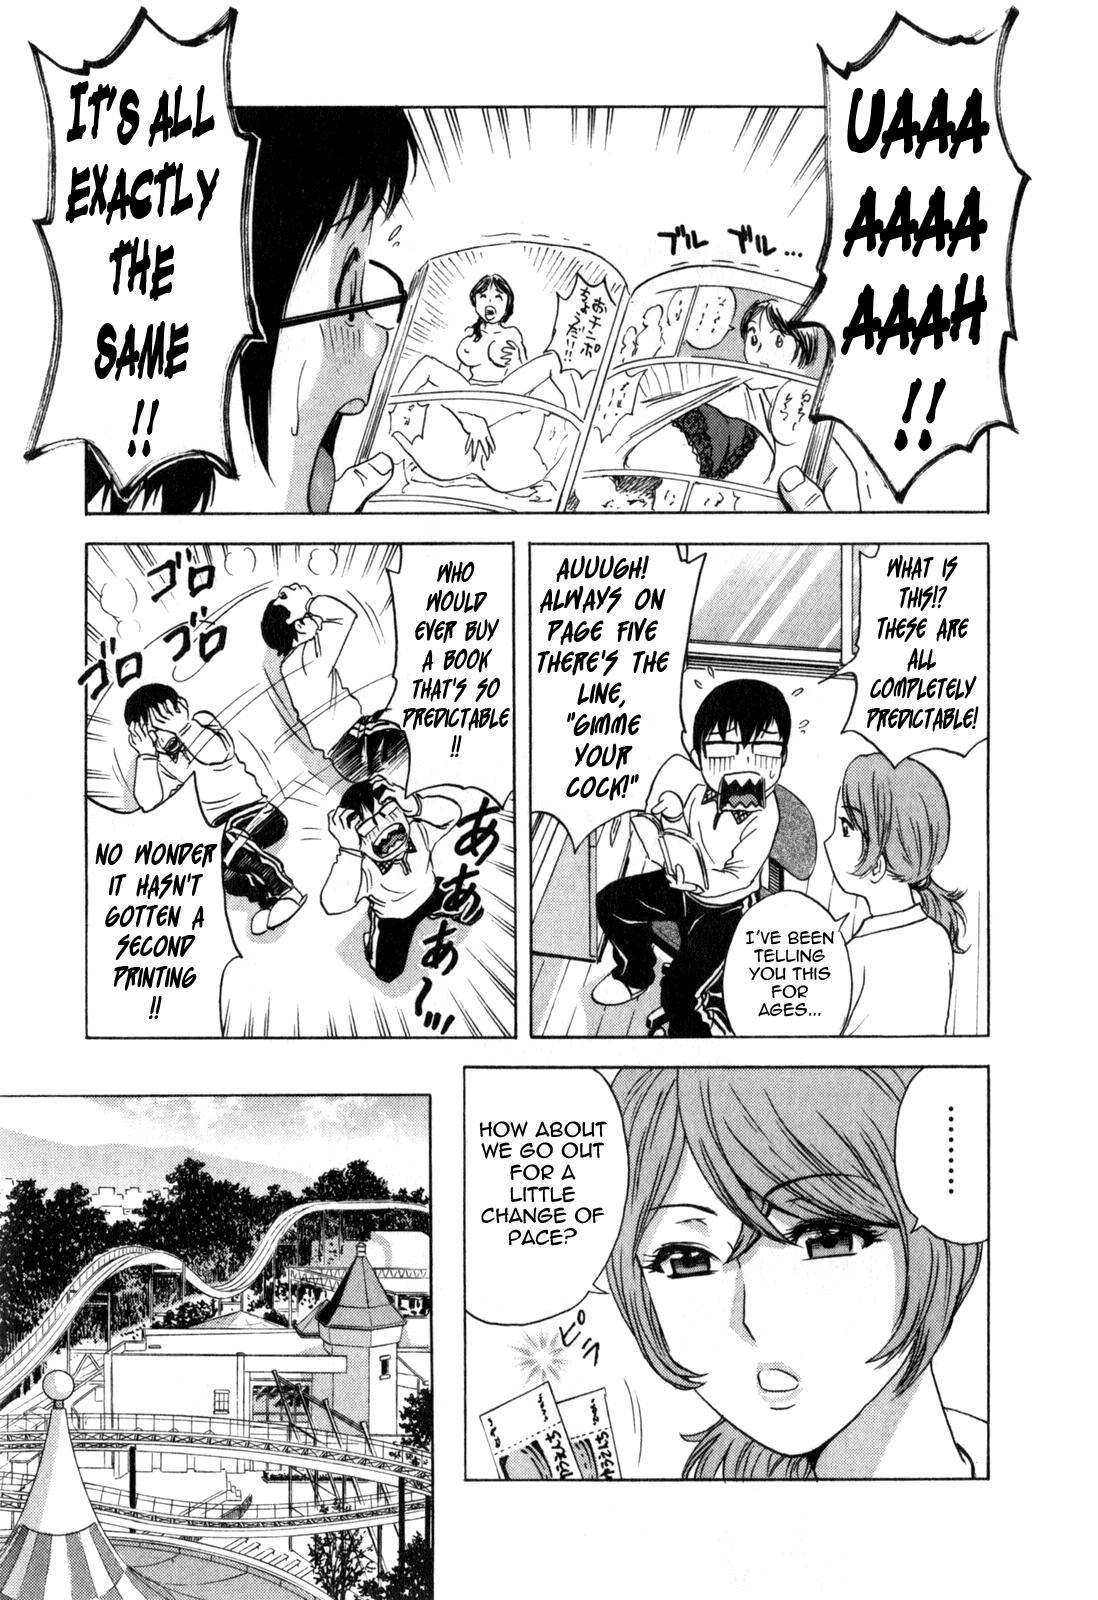 [Hidemaru] Life with Married Women Just Like a Manga 3 - Ch. 1-4 [English] {Tadanohito} 29